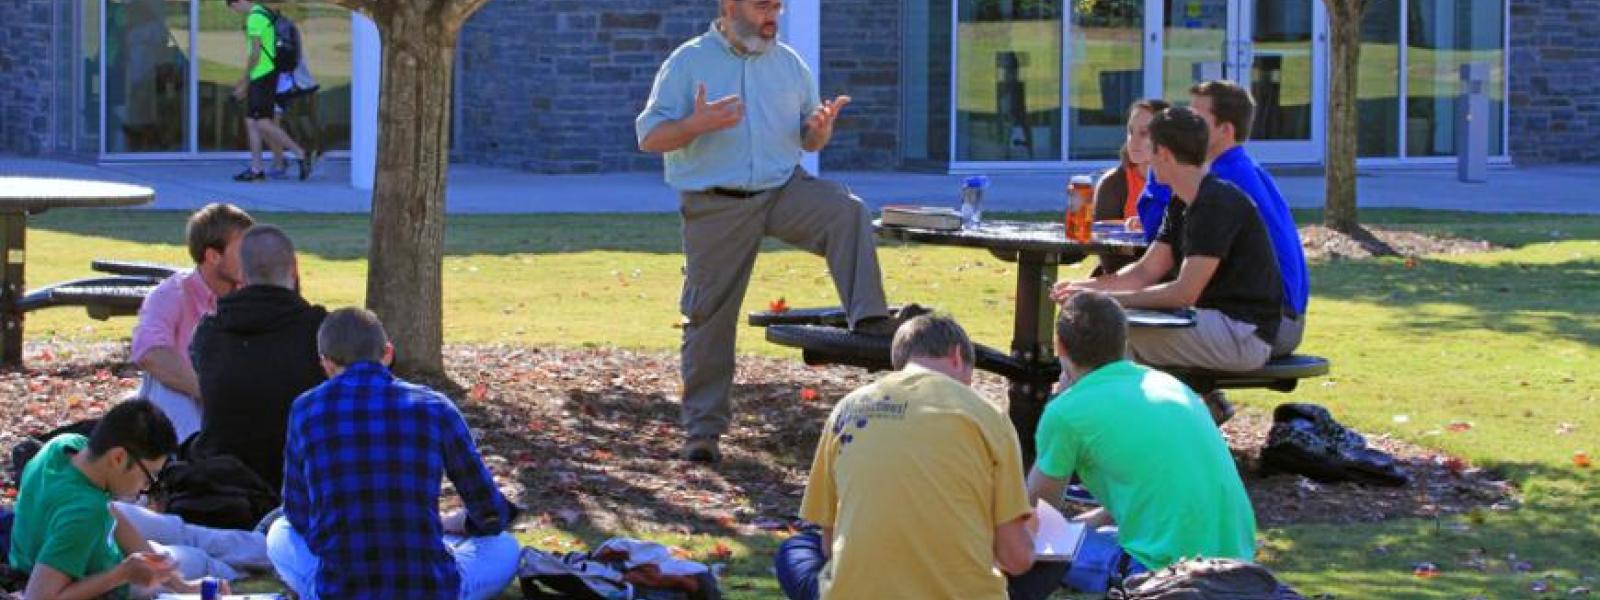 A CIU Professor teaches a class on the quad.